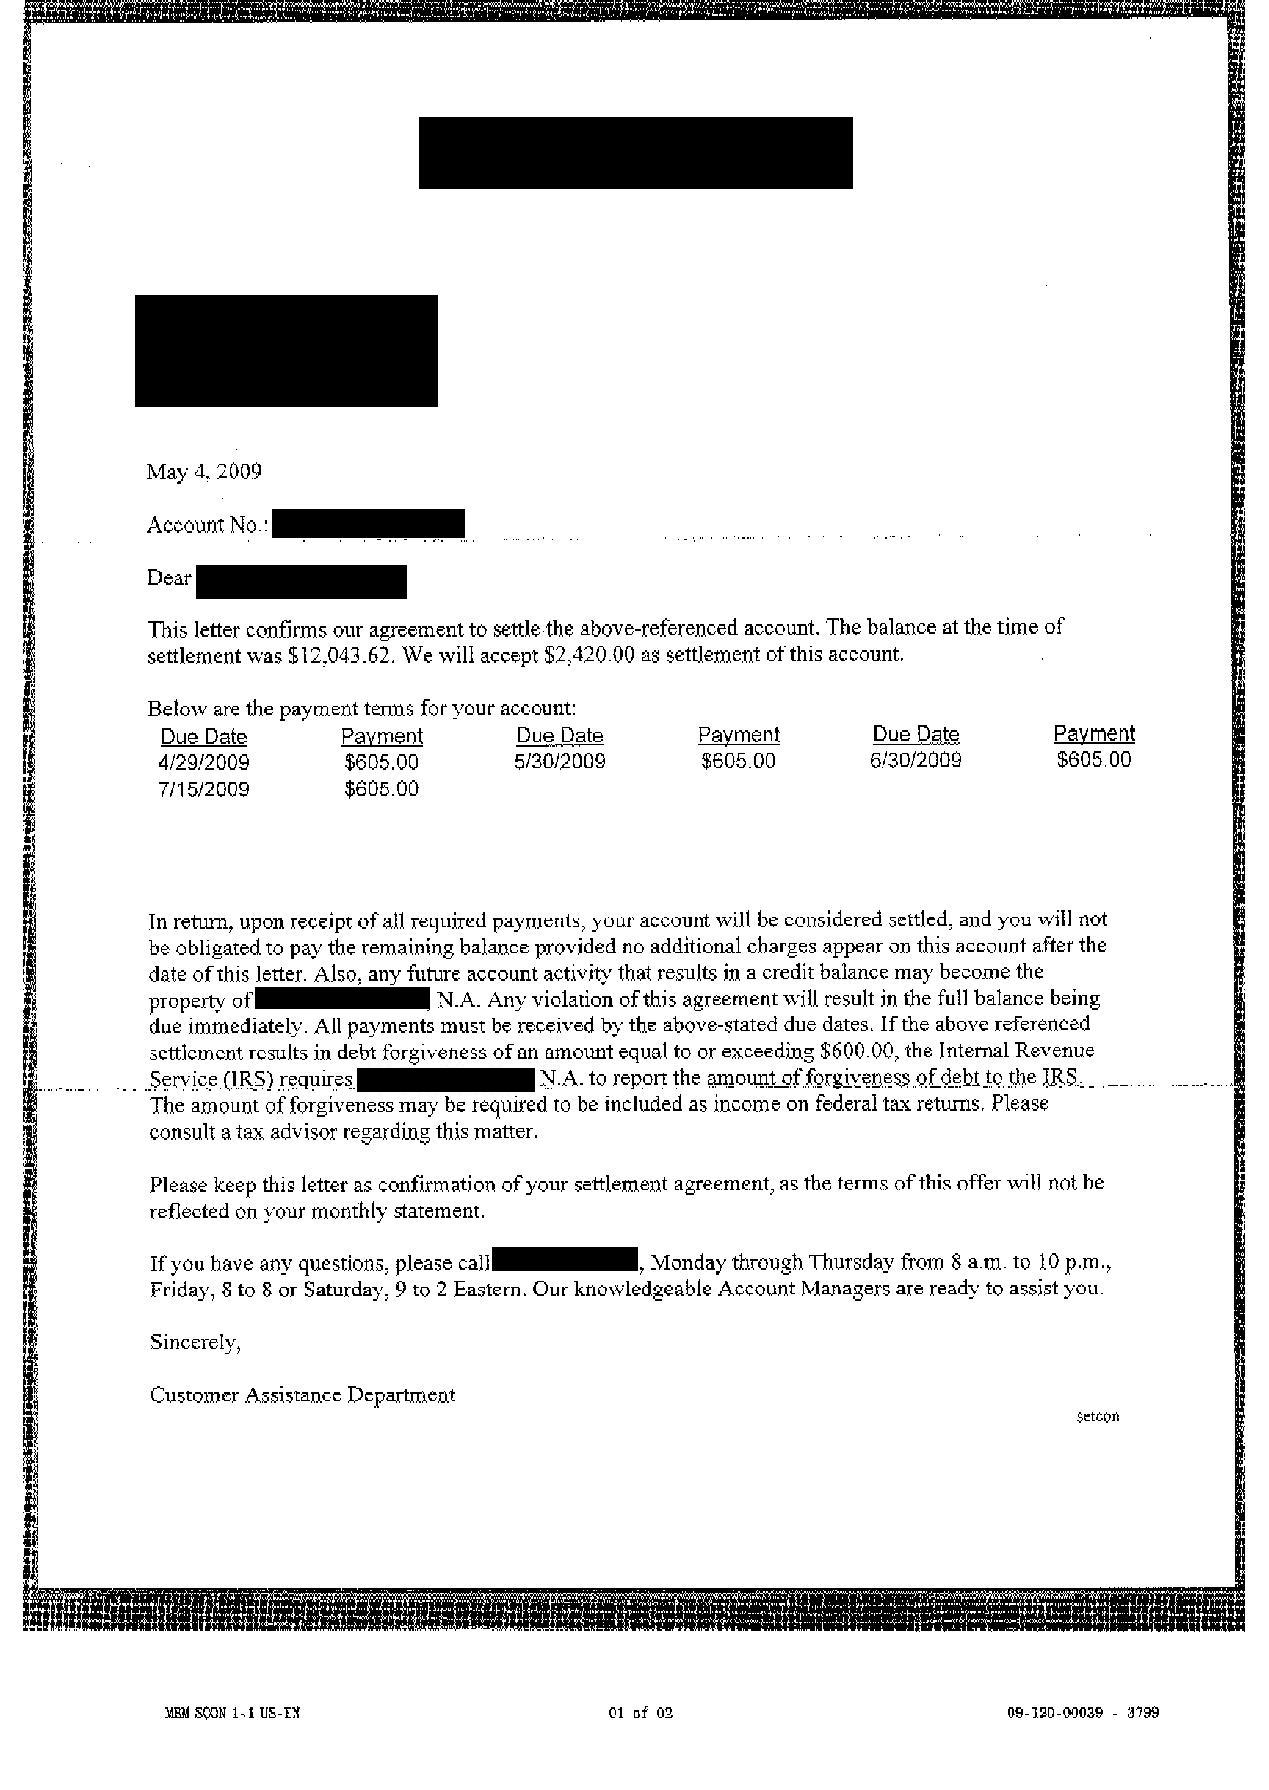 FIA Card Debt Settlement Letter Saved $9623